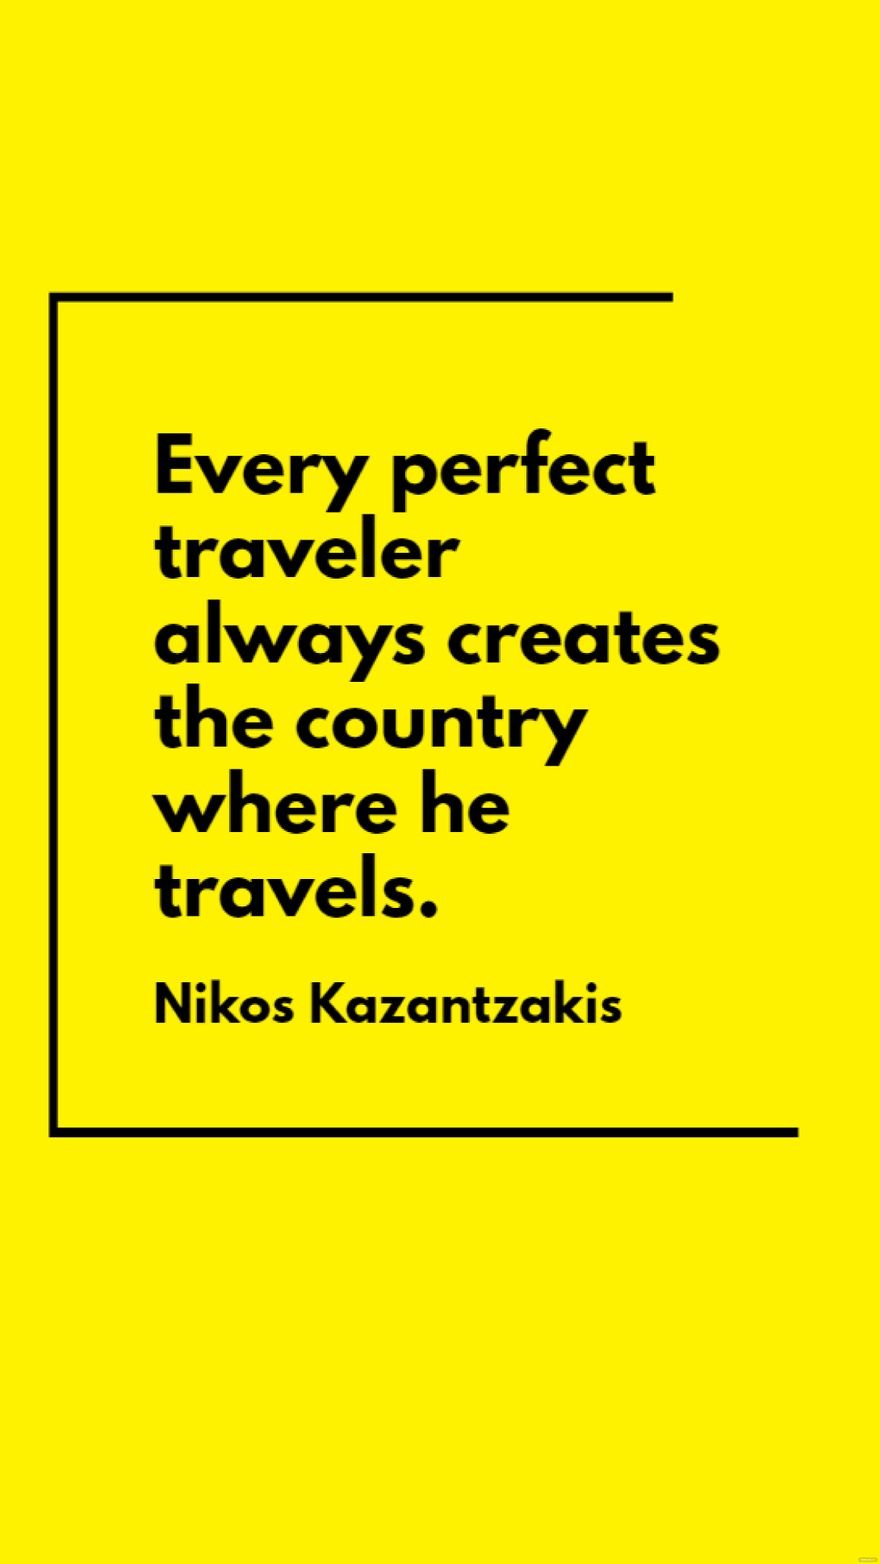 Free Nikos Kazantzakis - Every perfect traveler always creates the country where he travels. in JPG